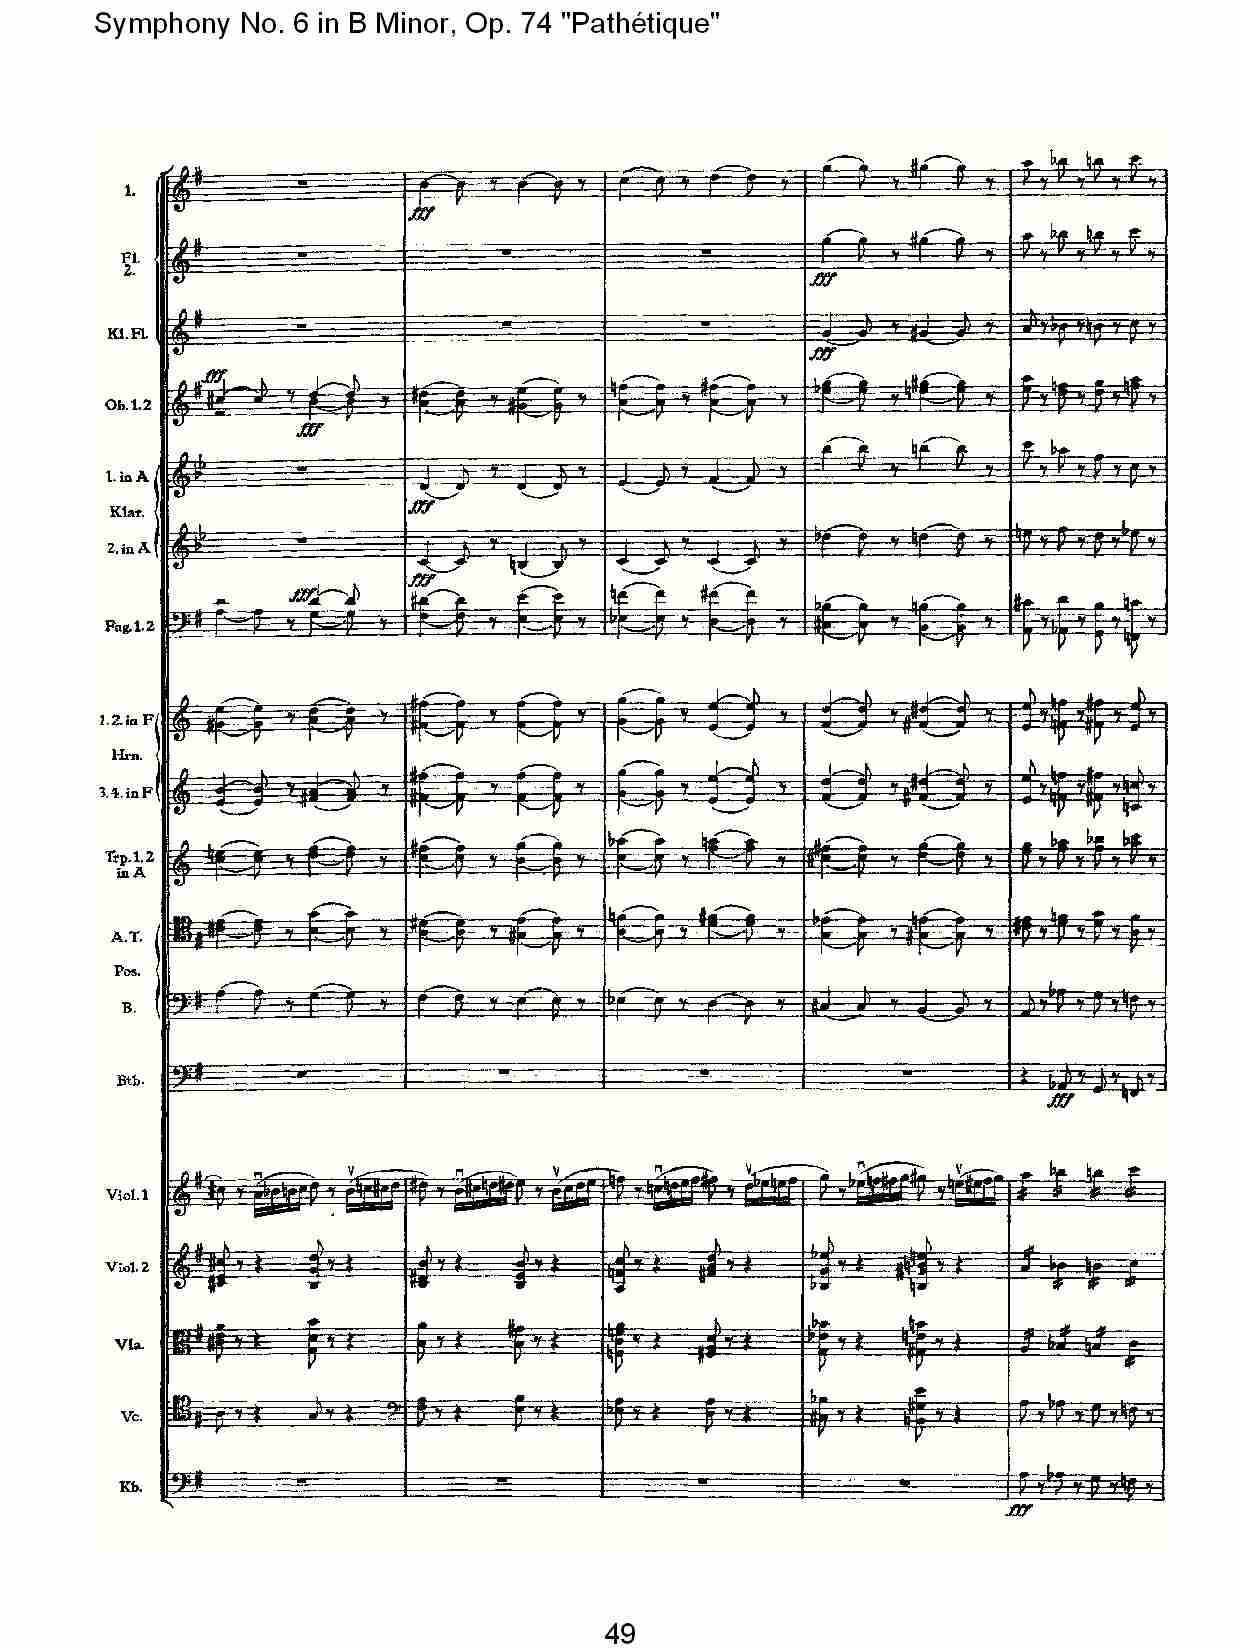 Symphony No. 6 in B Minor, Op.74 